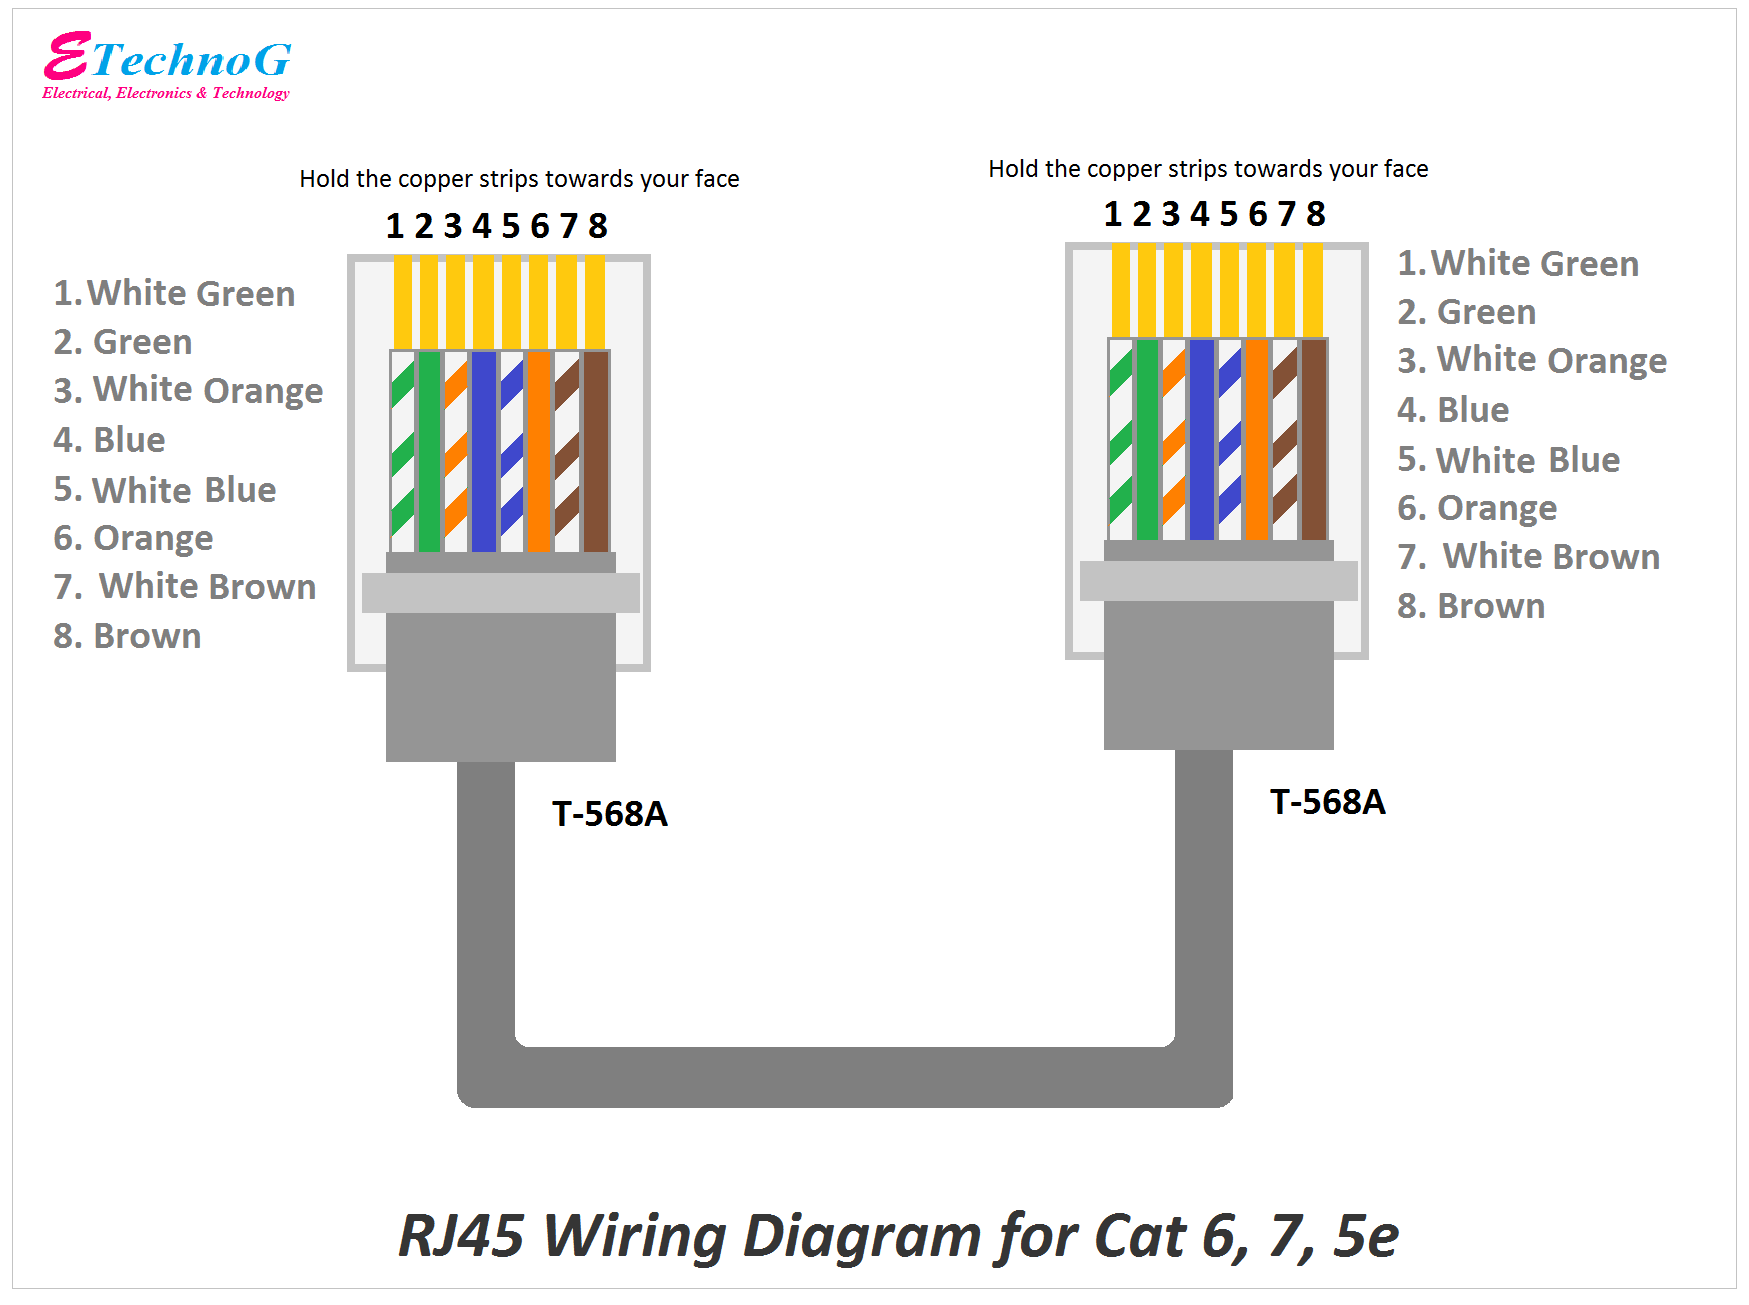 RJ45 Wiring Diagram for cat 6,7,5e, cat 6 wiring diagram, cat 5 wiring diagram